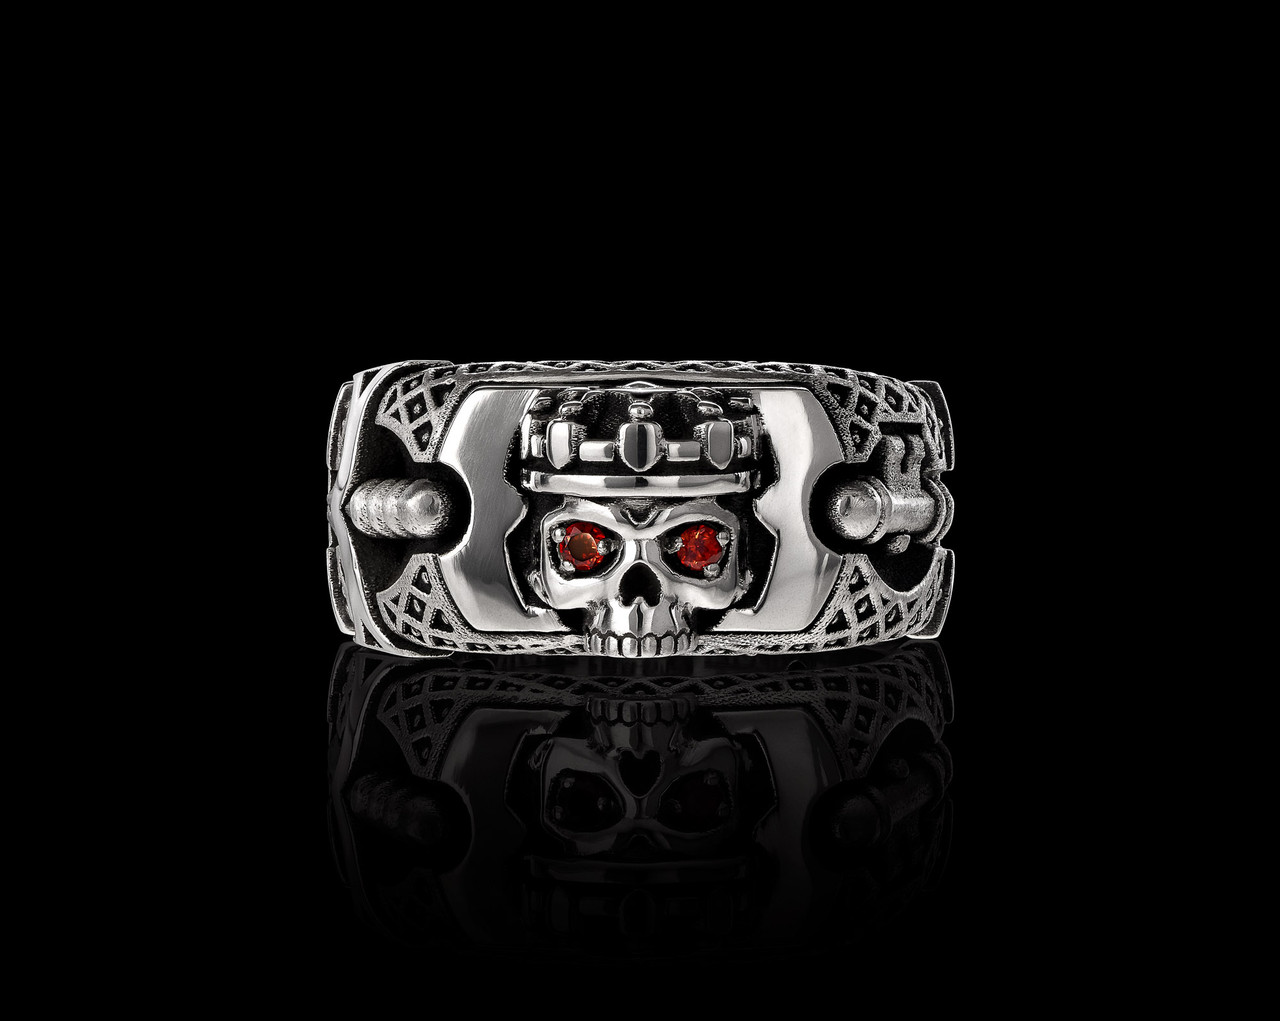 King's Skull Ring Sterling Silver | Skull King Ring ...